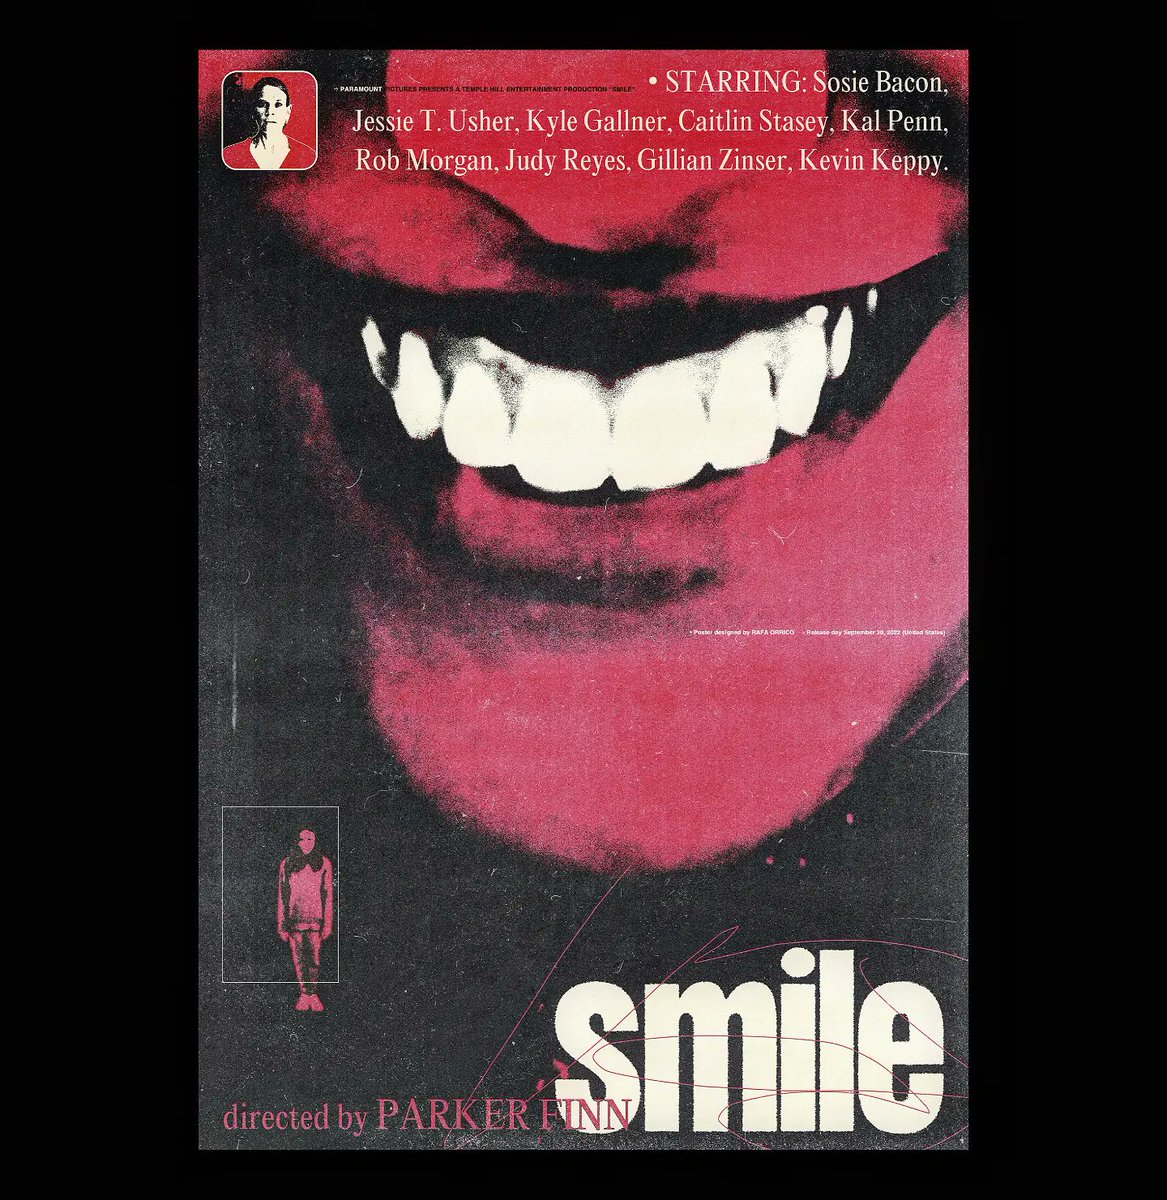 My alternative movie poster for Smile, directed by Parker Finn!
#smilemovie #sosiebacon #parkerfinn